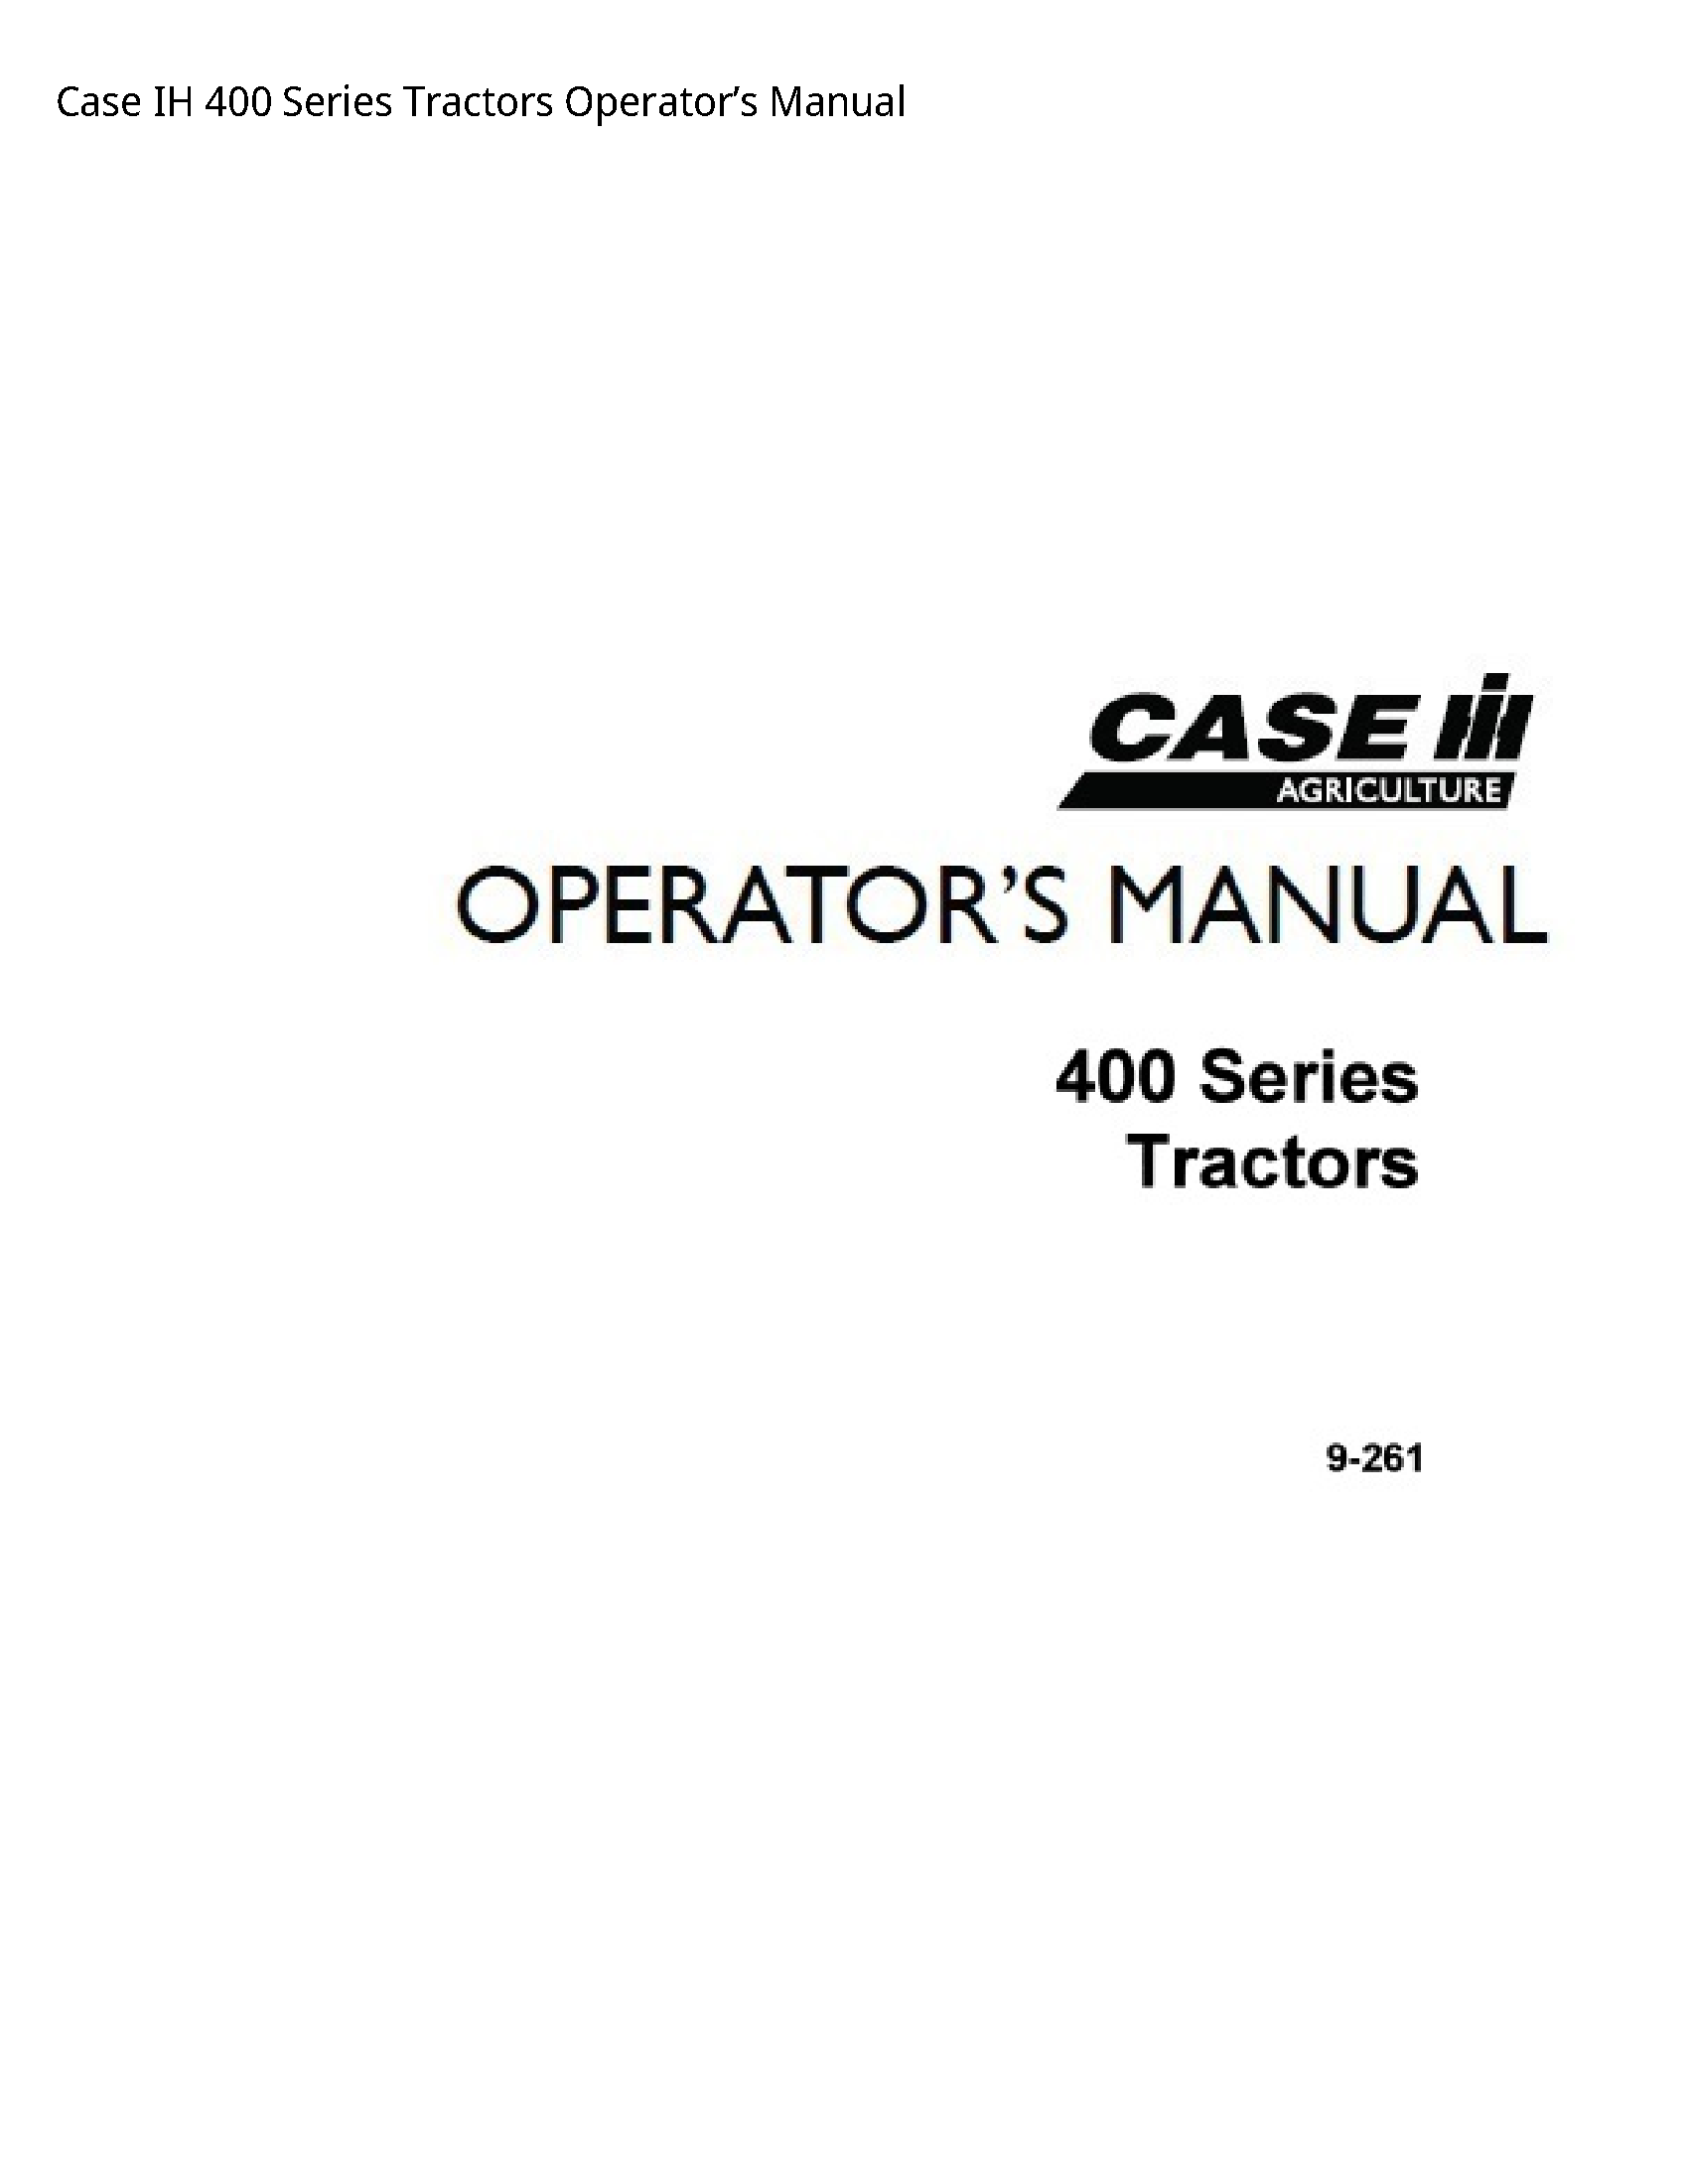 Case/Case IH 400 IH Series Tractors Operator’s manual